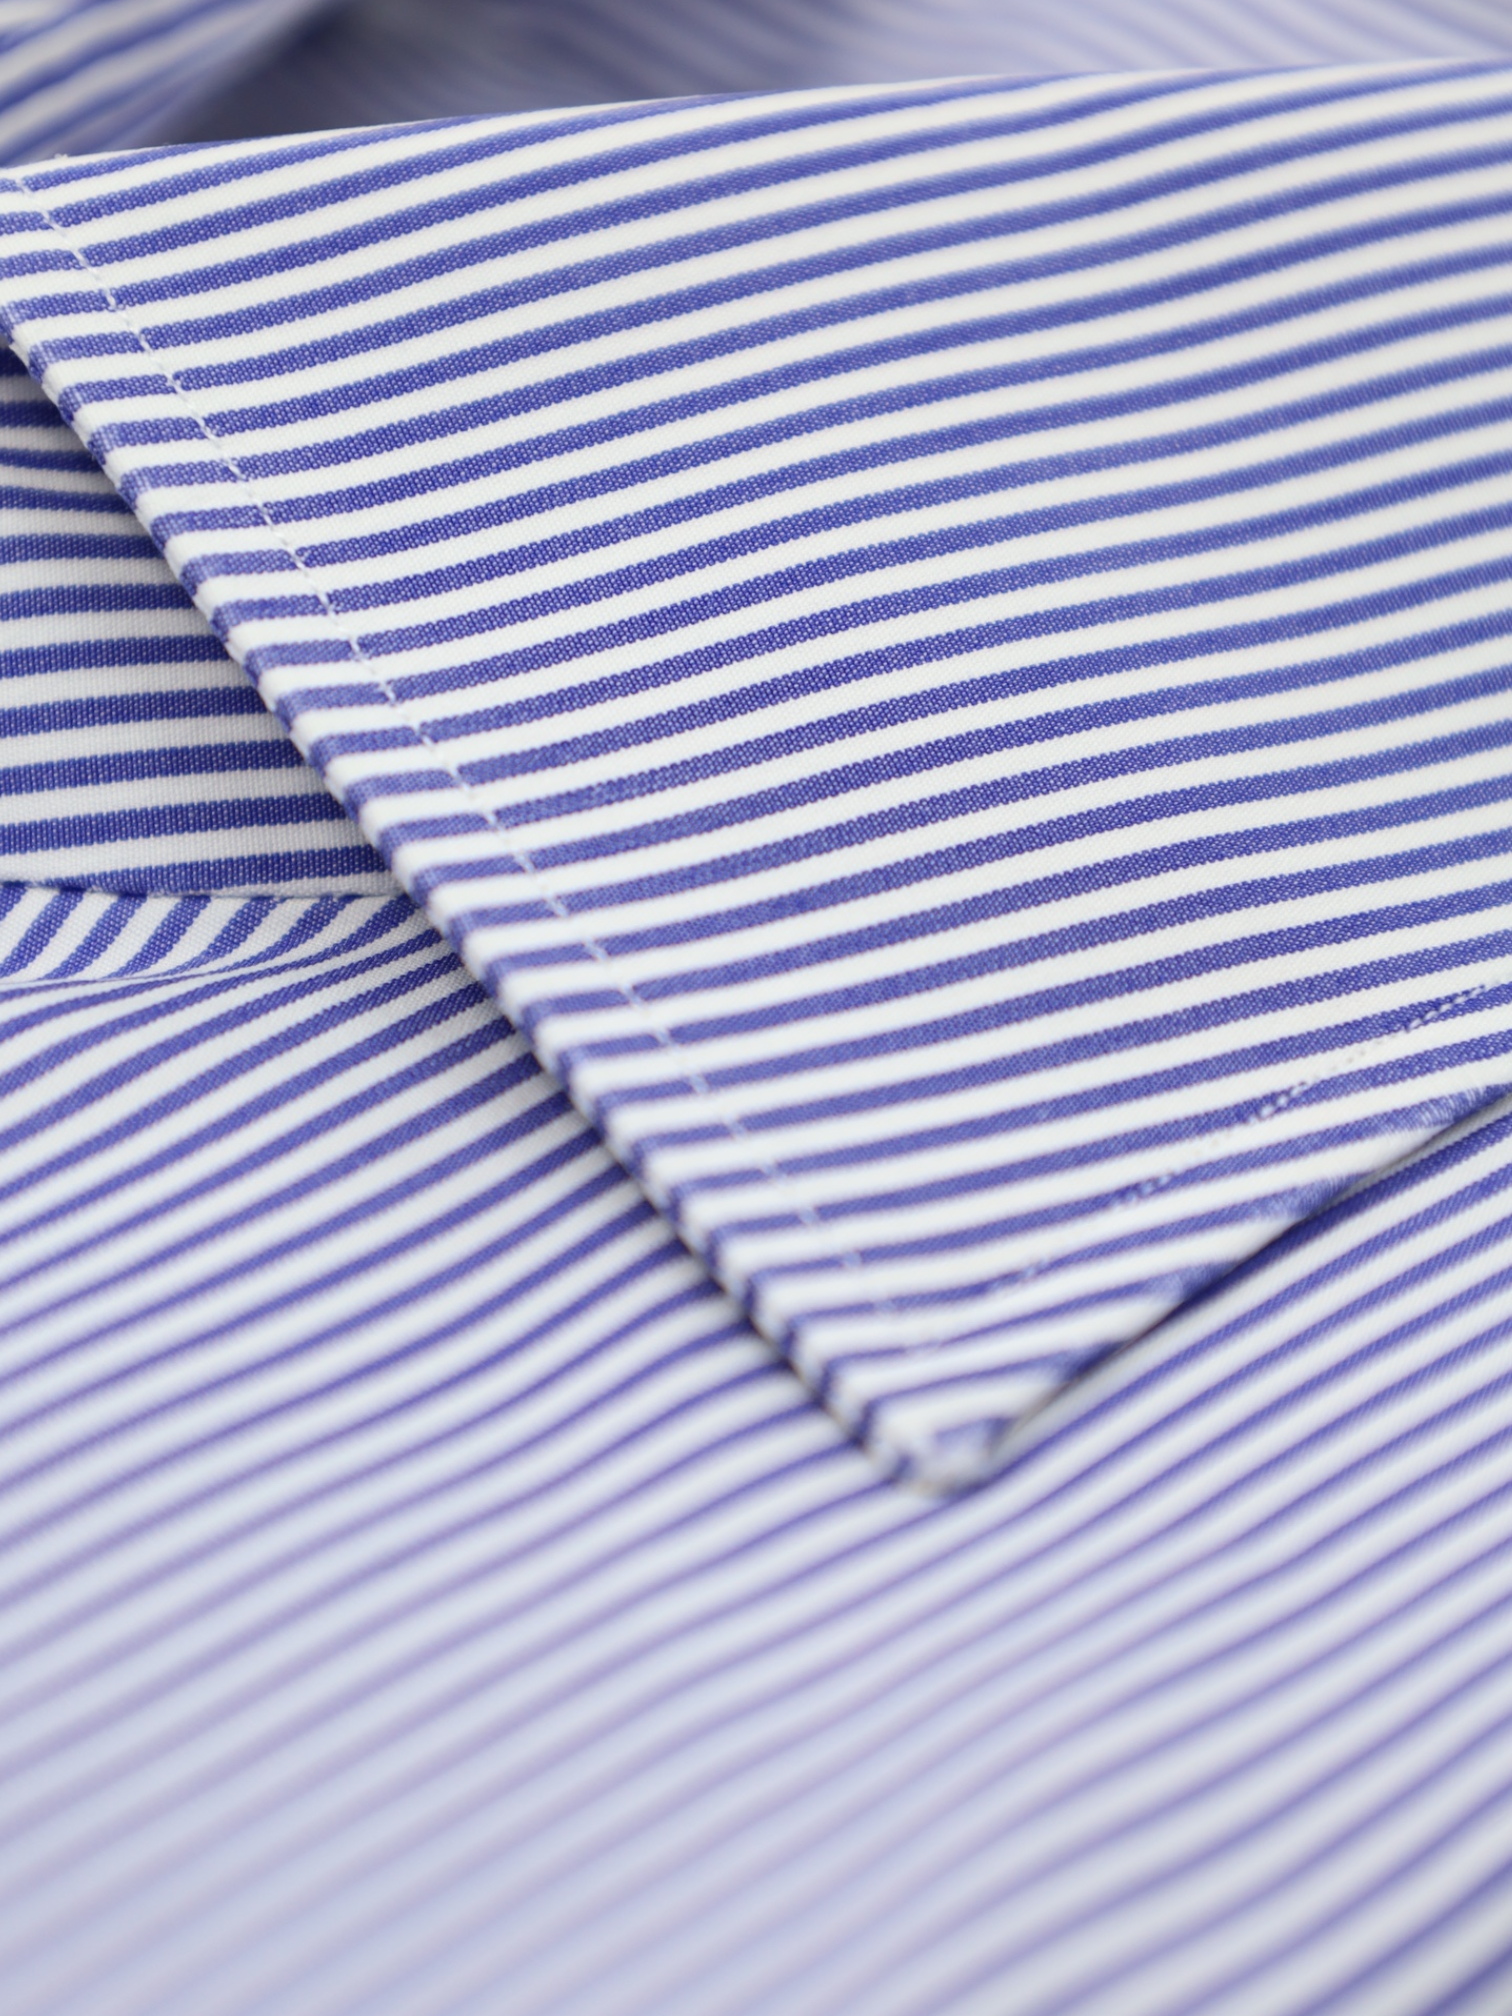 Kiton Light Blue Pinstripe Cotton Shirt